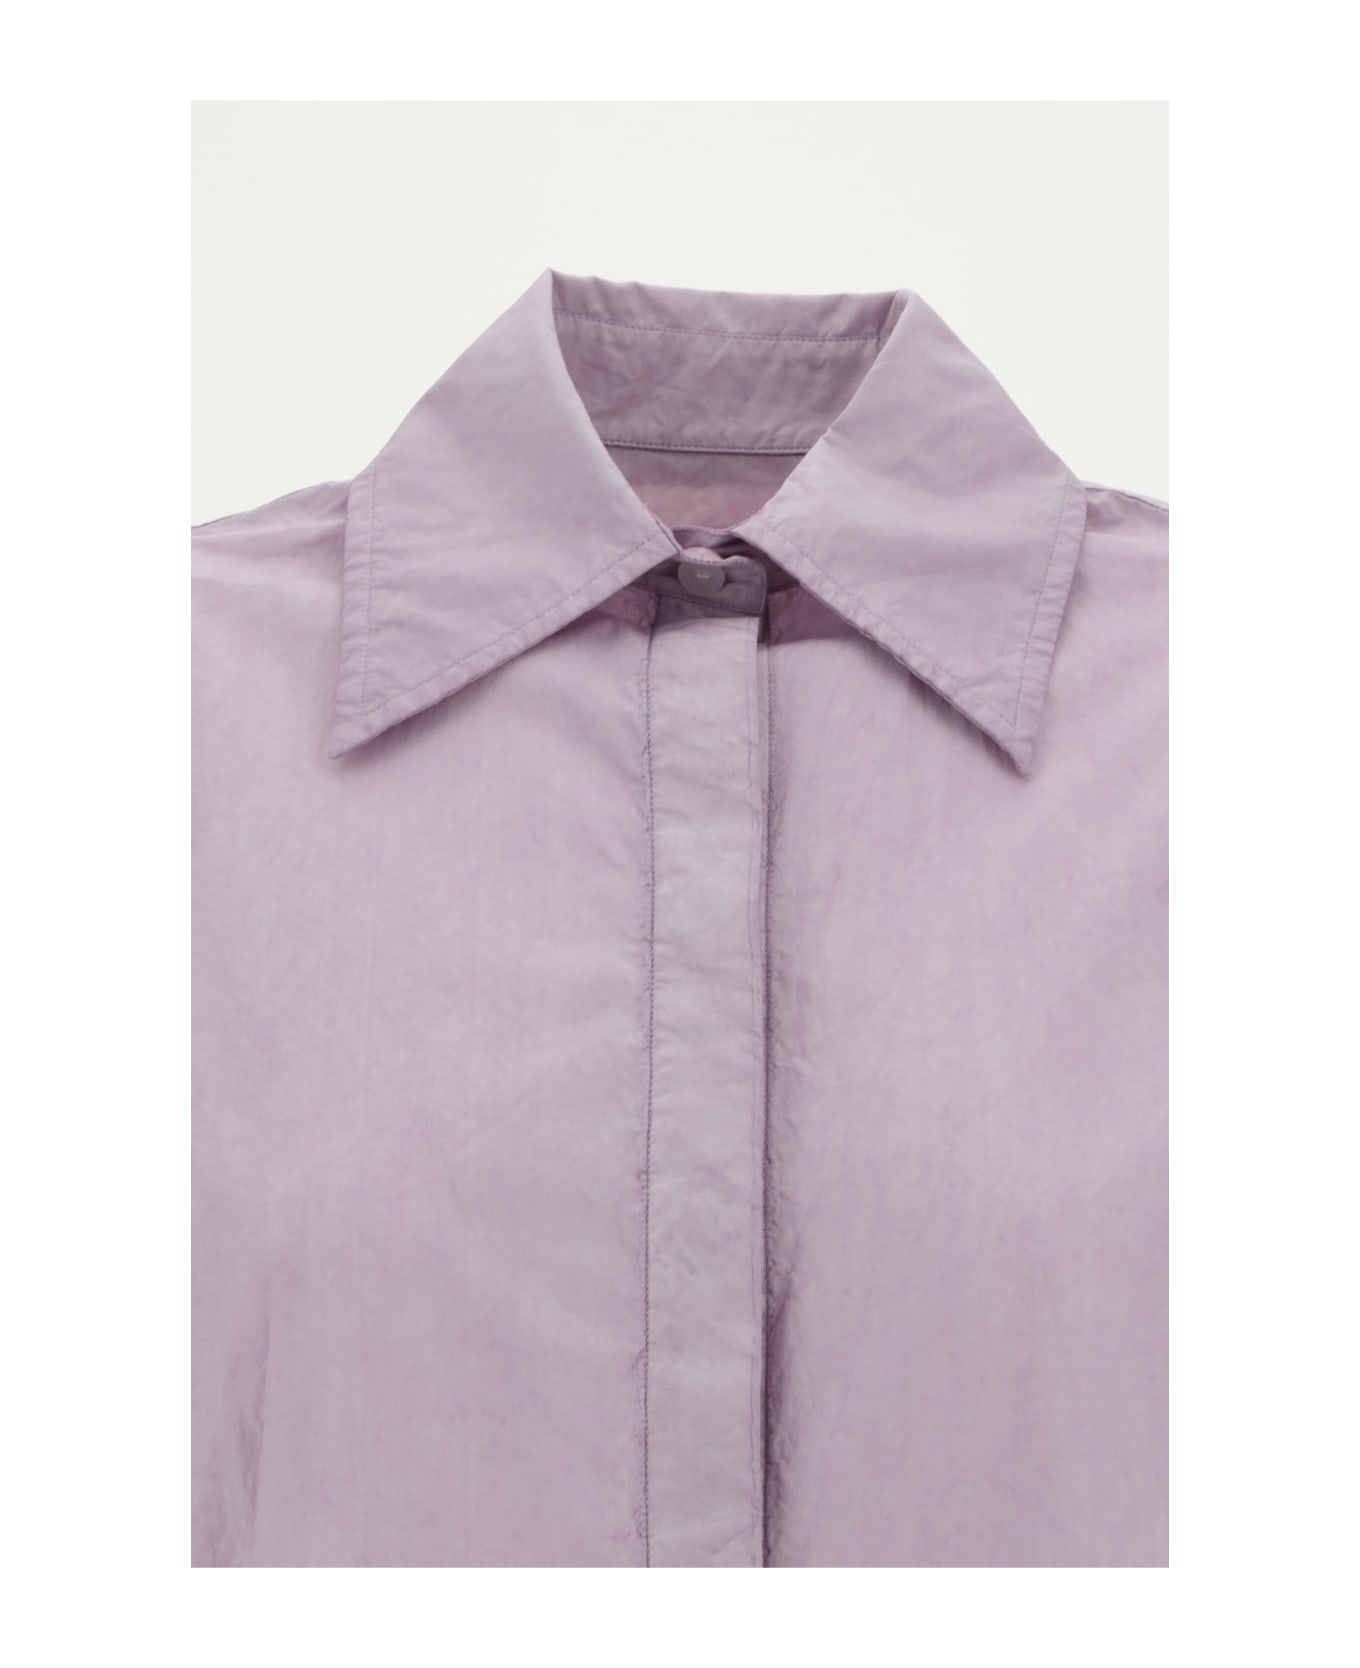 Quira Shirt - Misty Lilac シャツ